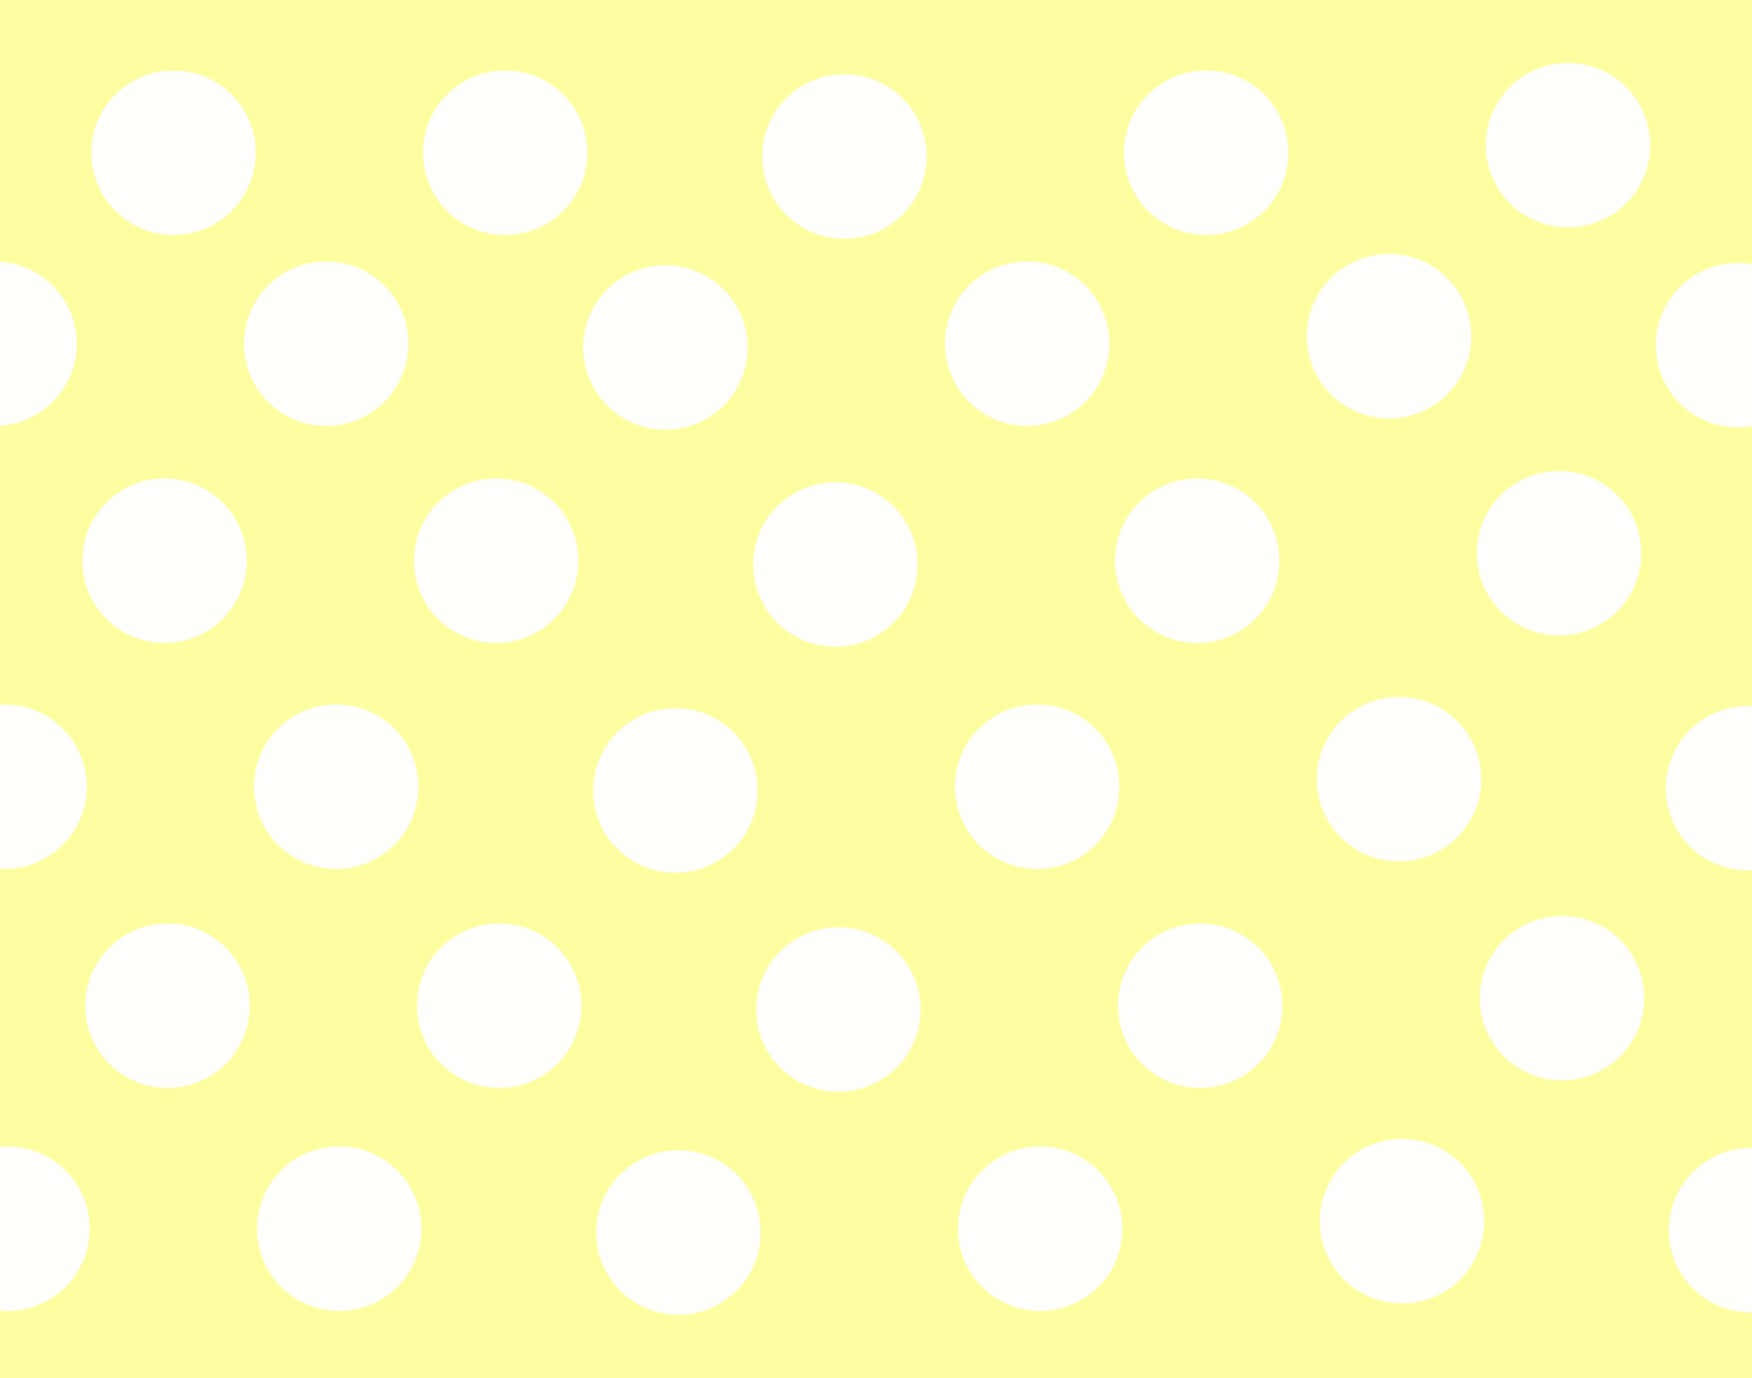 Download Vibrant Yellow Polka Dot Background Wallpaper | Wallpapers.com